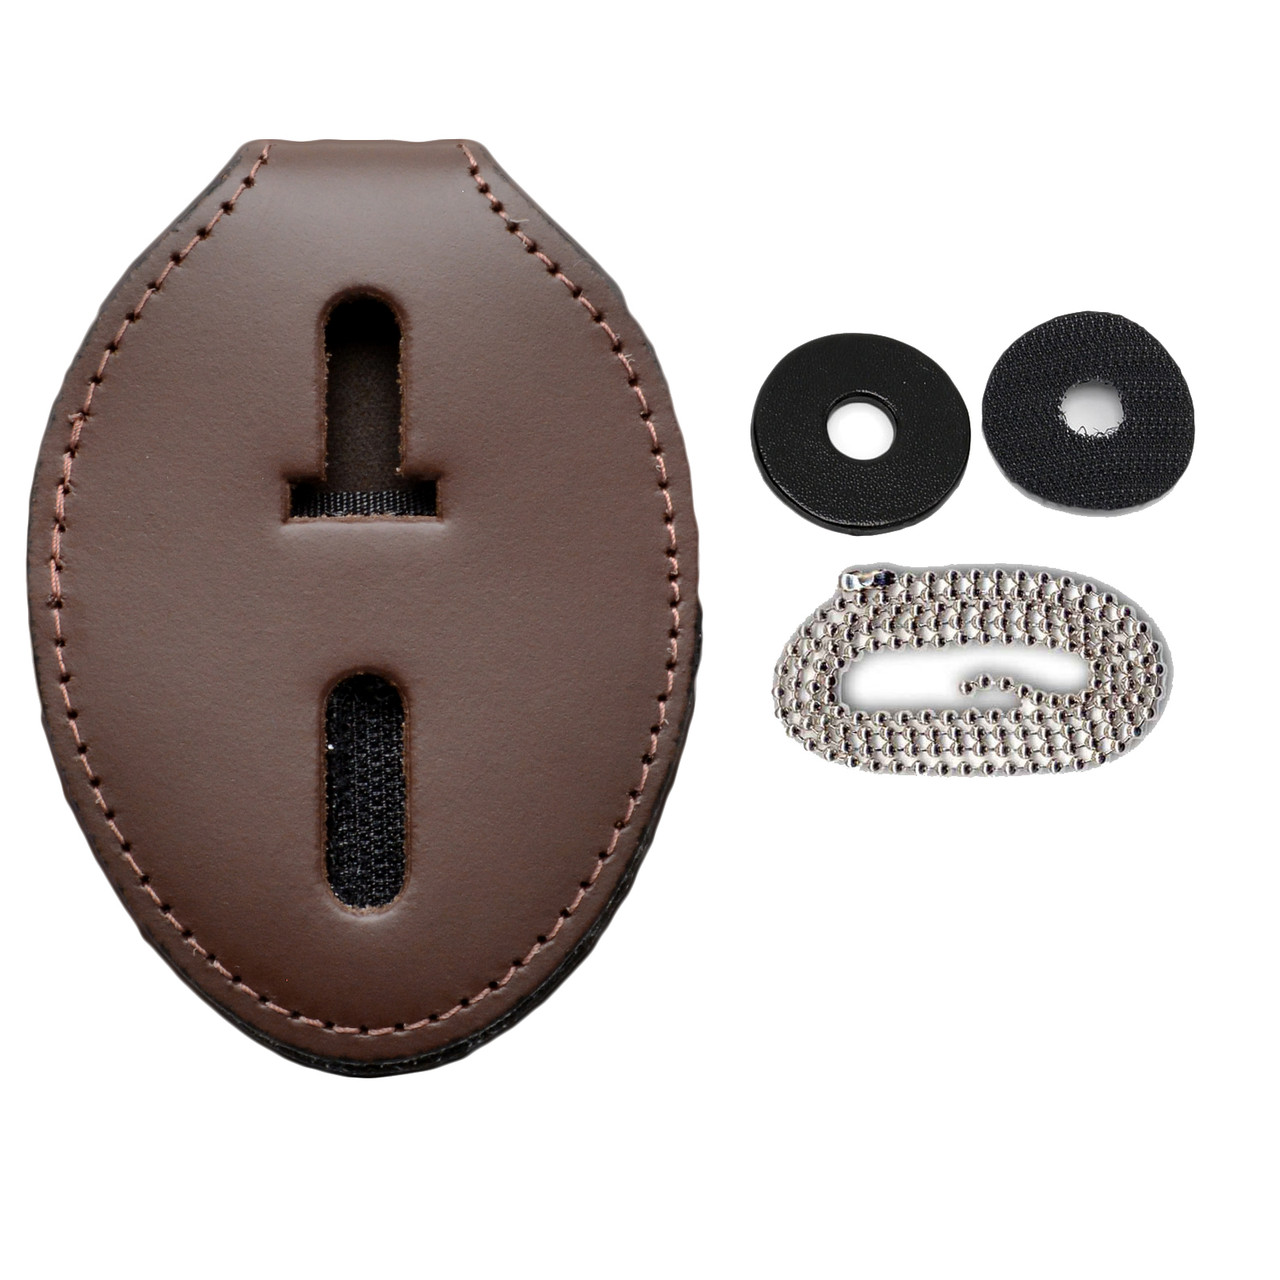 Universal Badge Holder Leather Clip on Belt Neck Hanger w/Chain - Brown Leather (Teardrop)